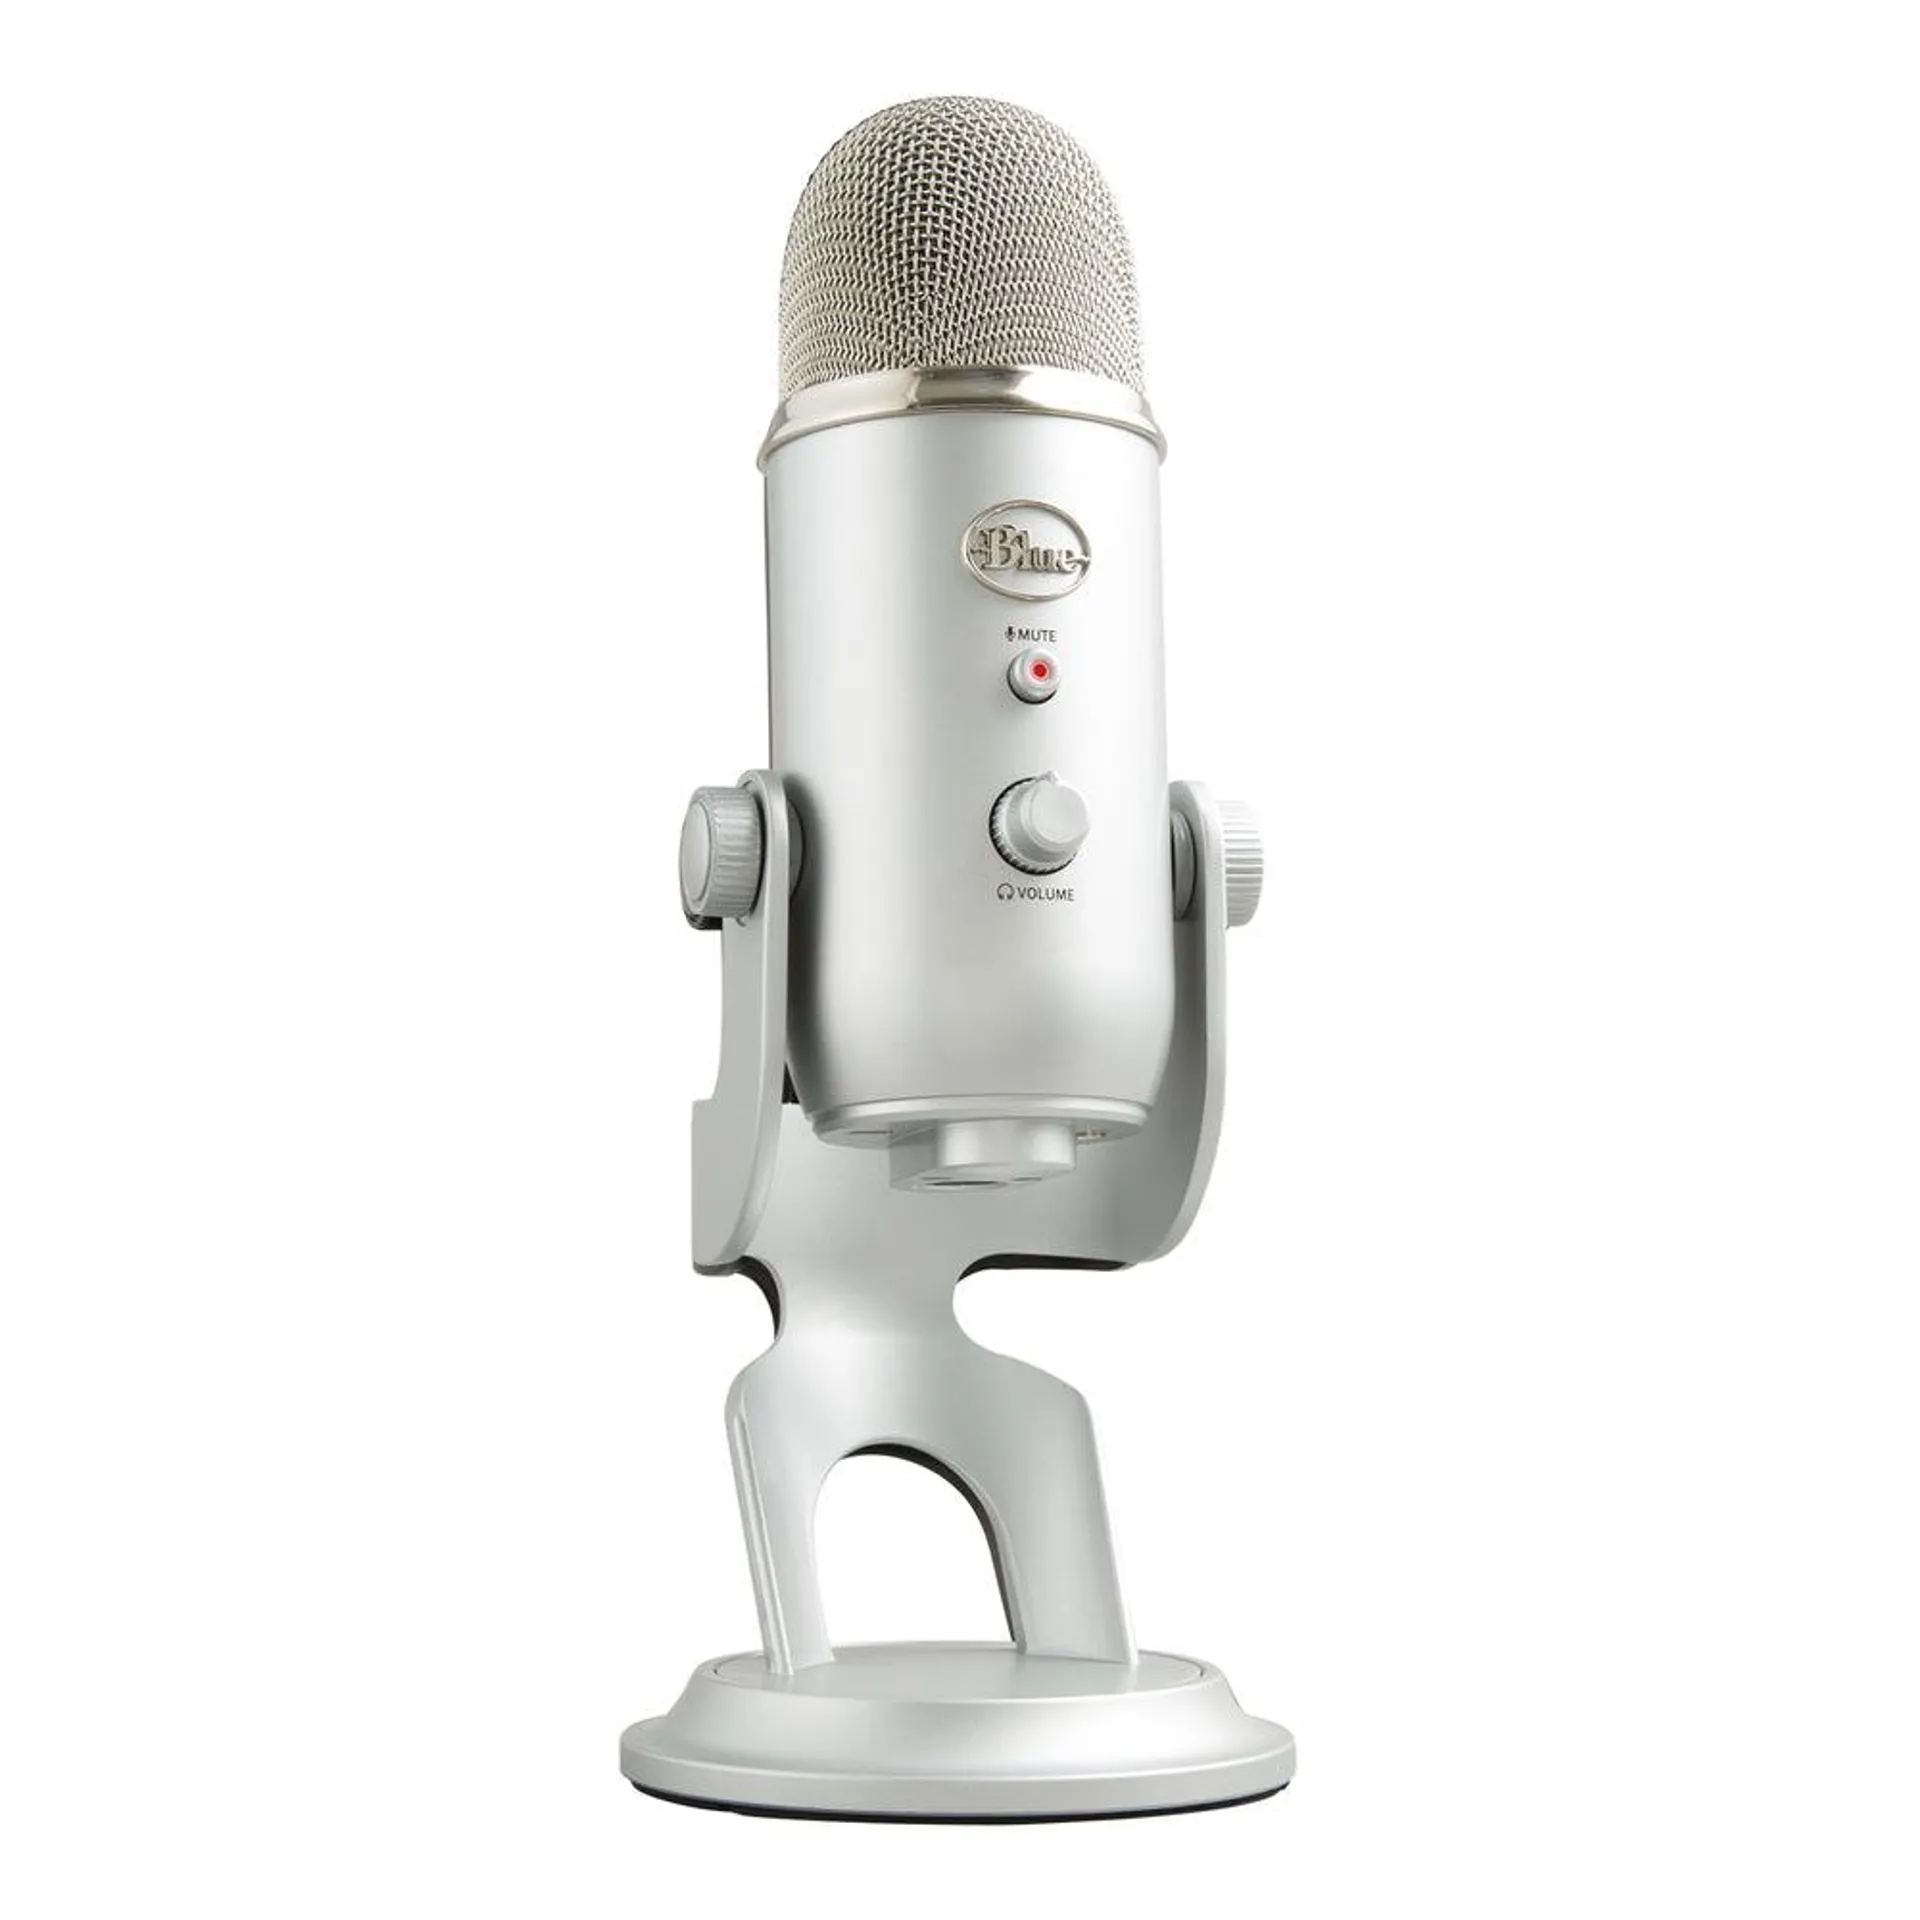 Blue Yeti USB Condenser Microphone - Silver